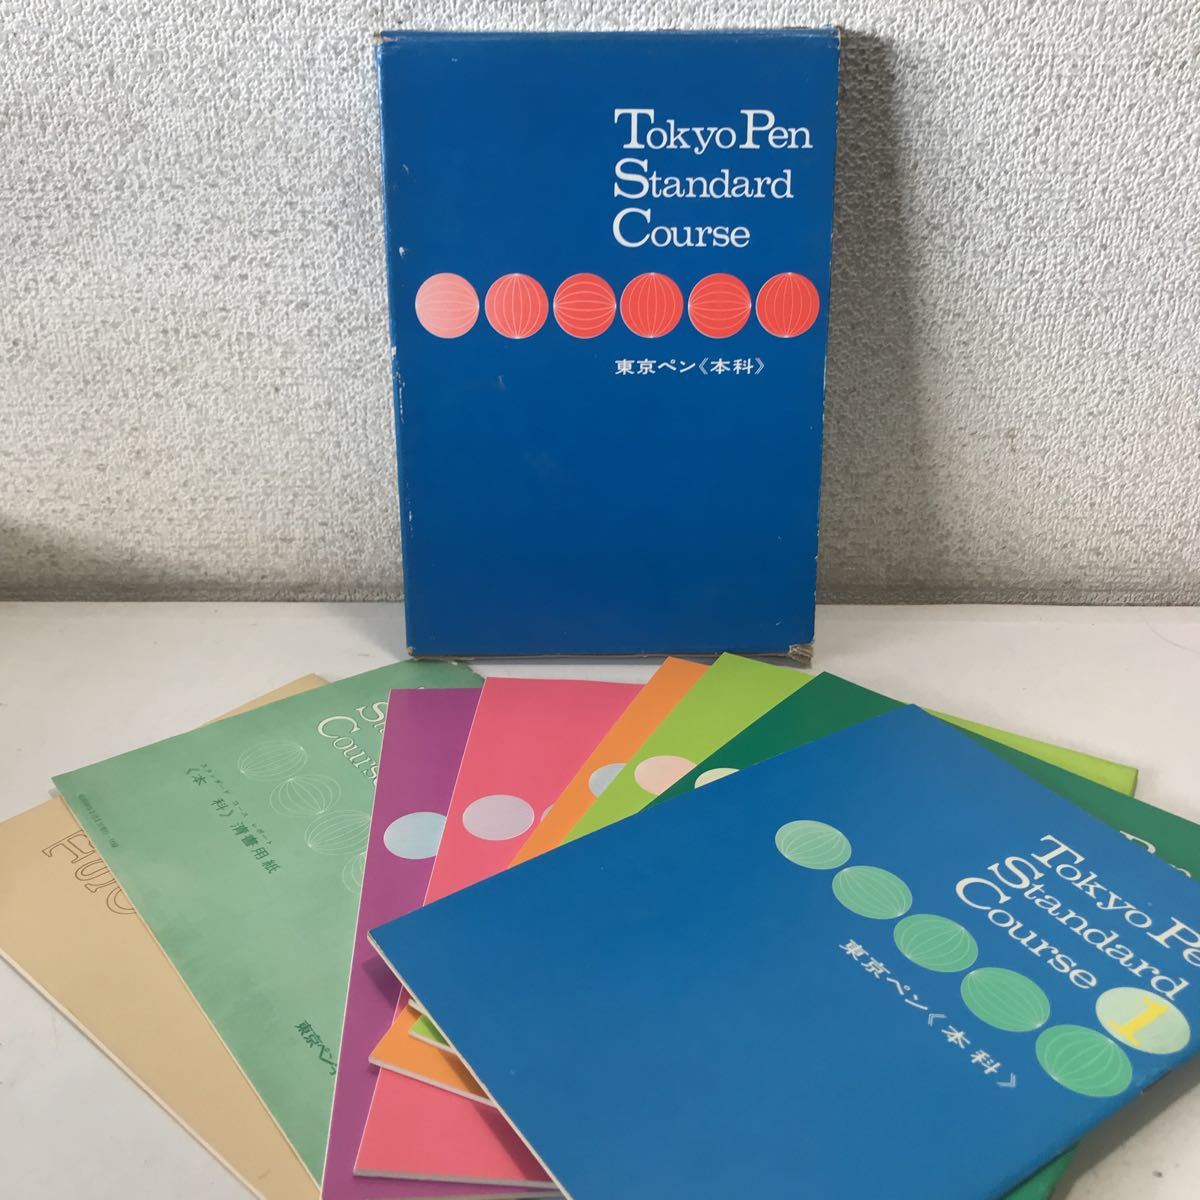 230108 ◎ L04 ◎ Tokyo Pen Standard Course Tokyo Pen (Monogatari) 6 Книги+Характерная бумага/рабочая книга Токио Пенджи Ассоциация образования